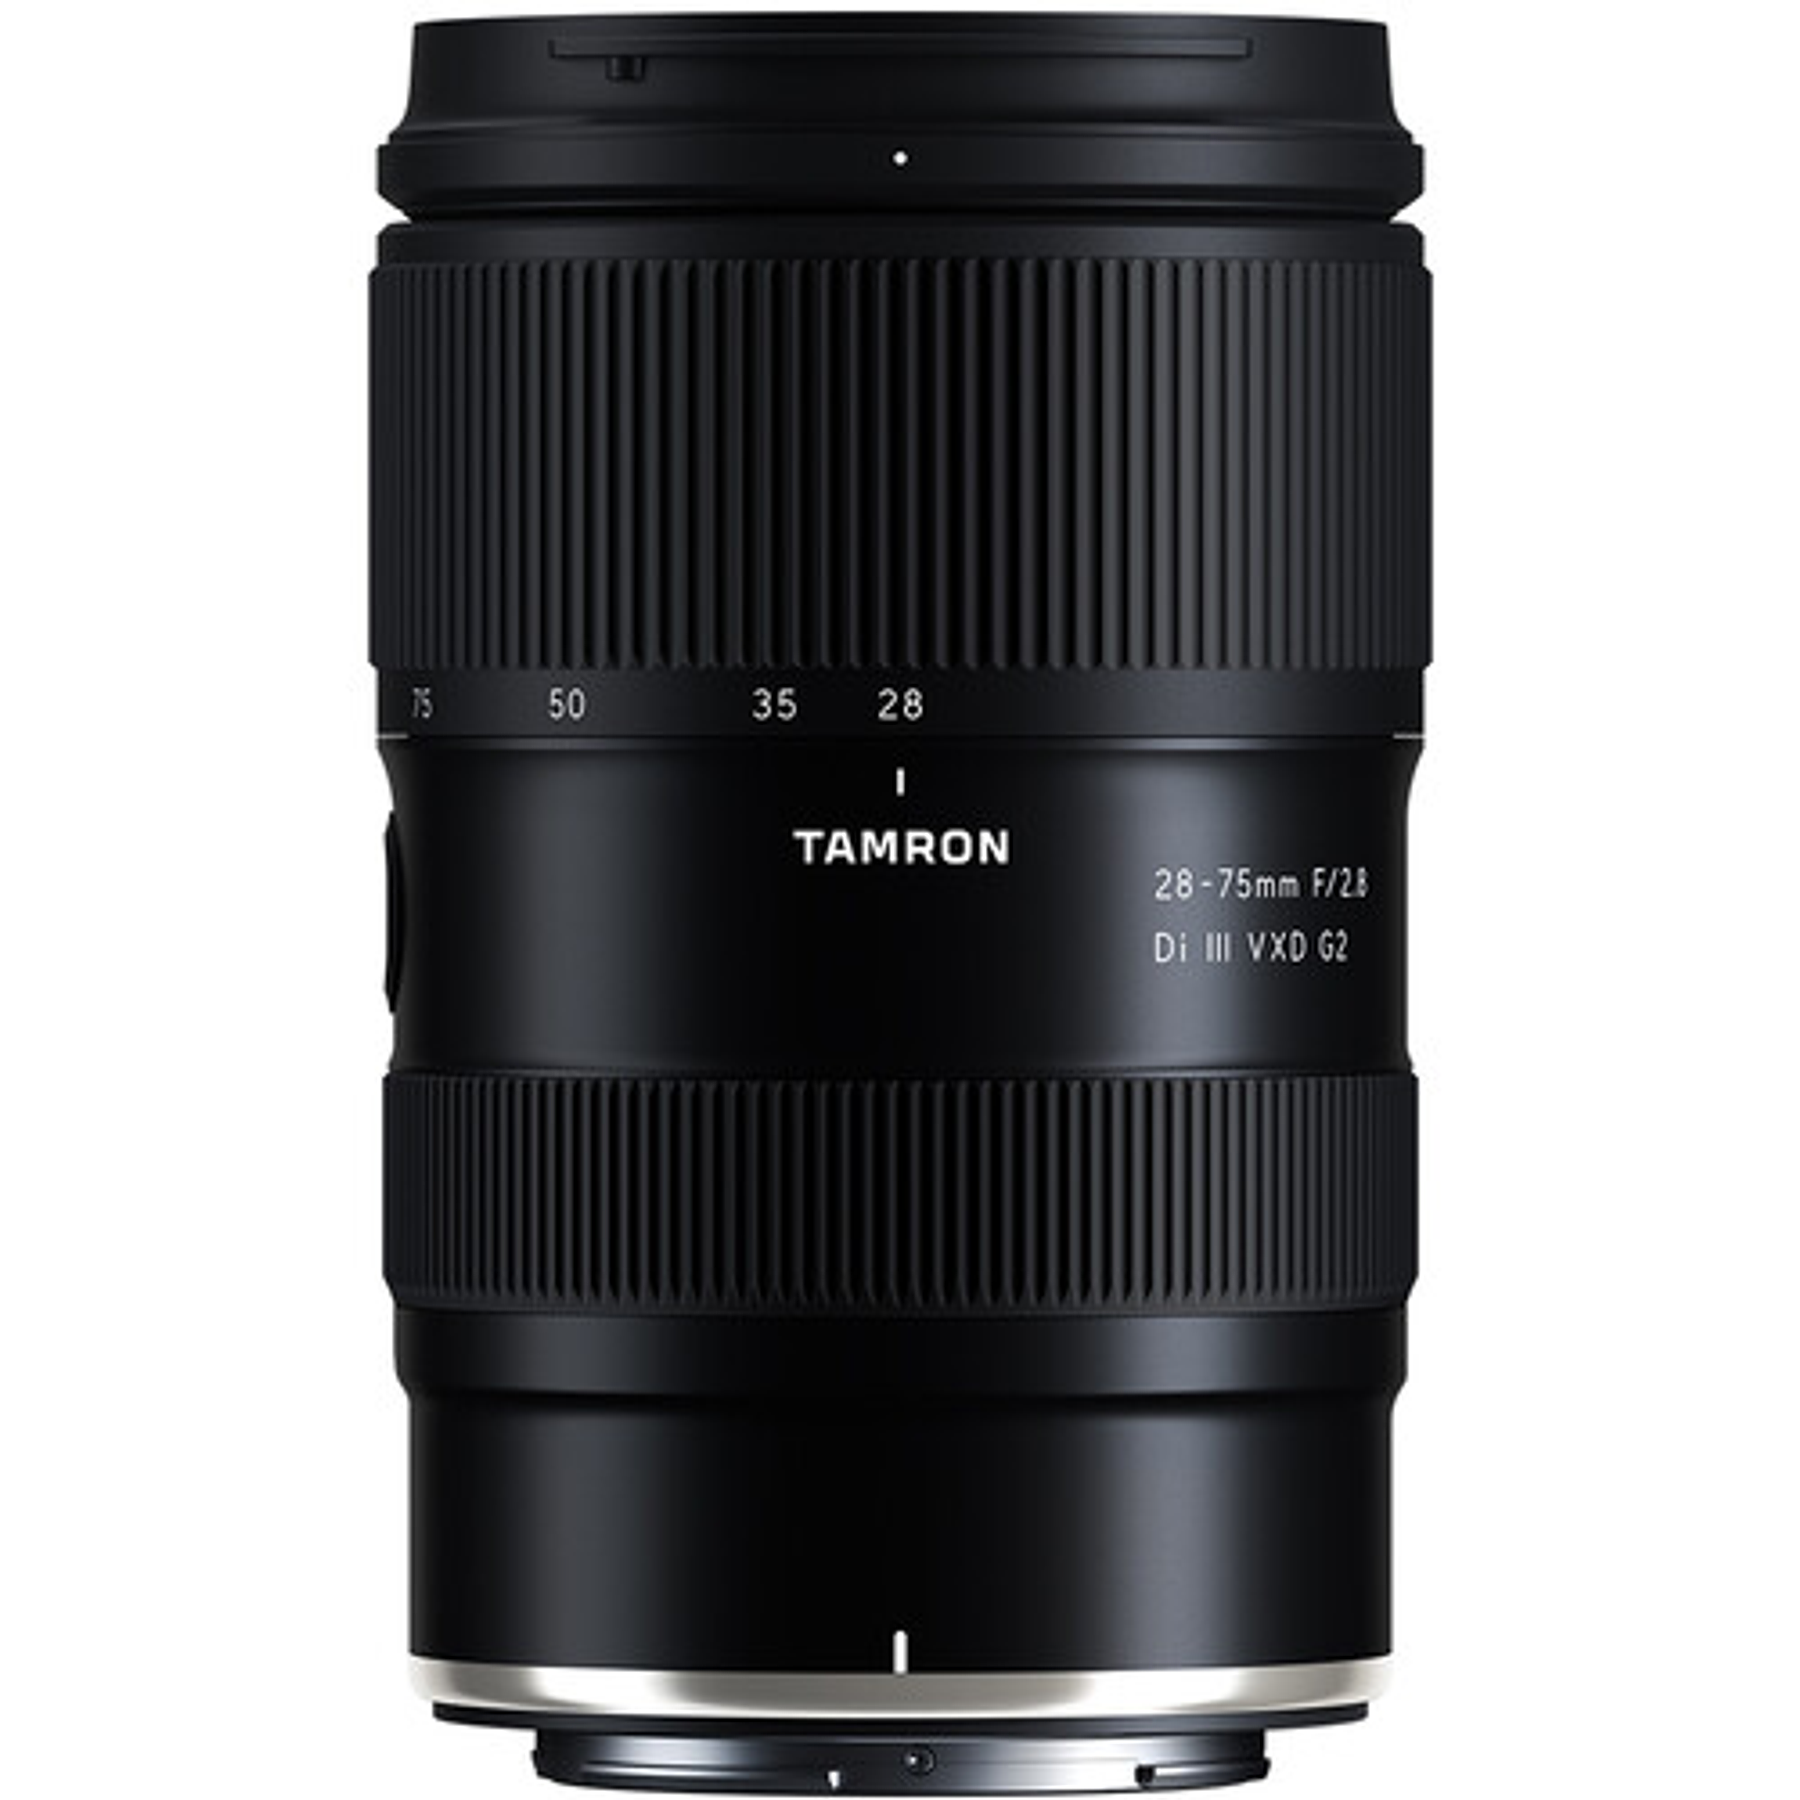 Tamron 28-75mm f/2.8 Di III VXD G2 (Nikon Z)